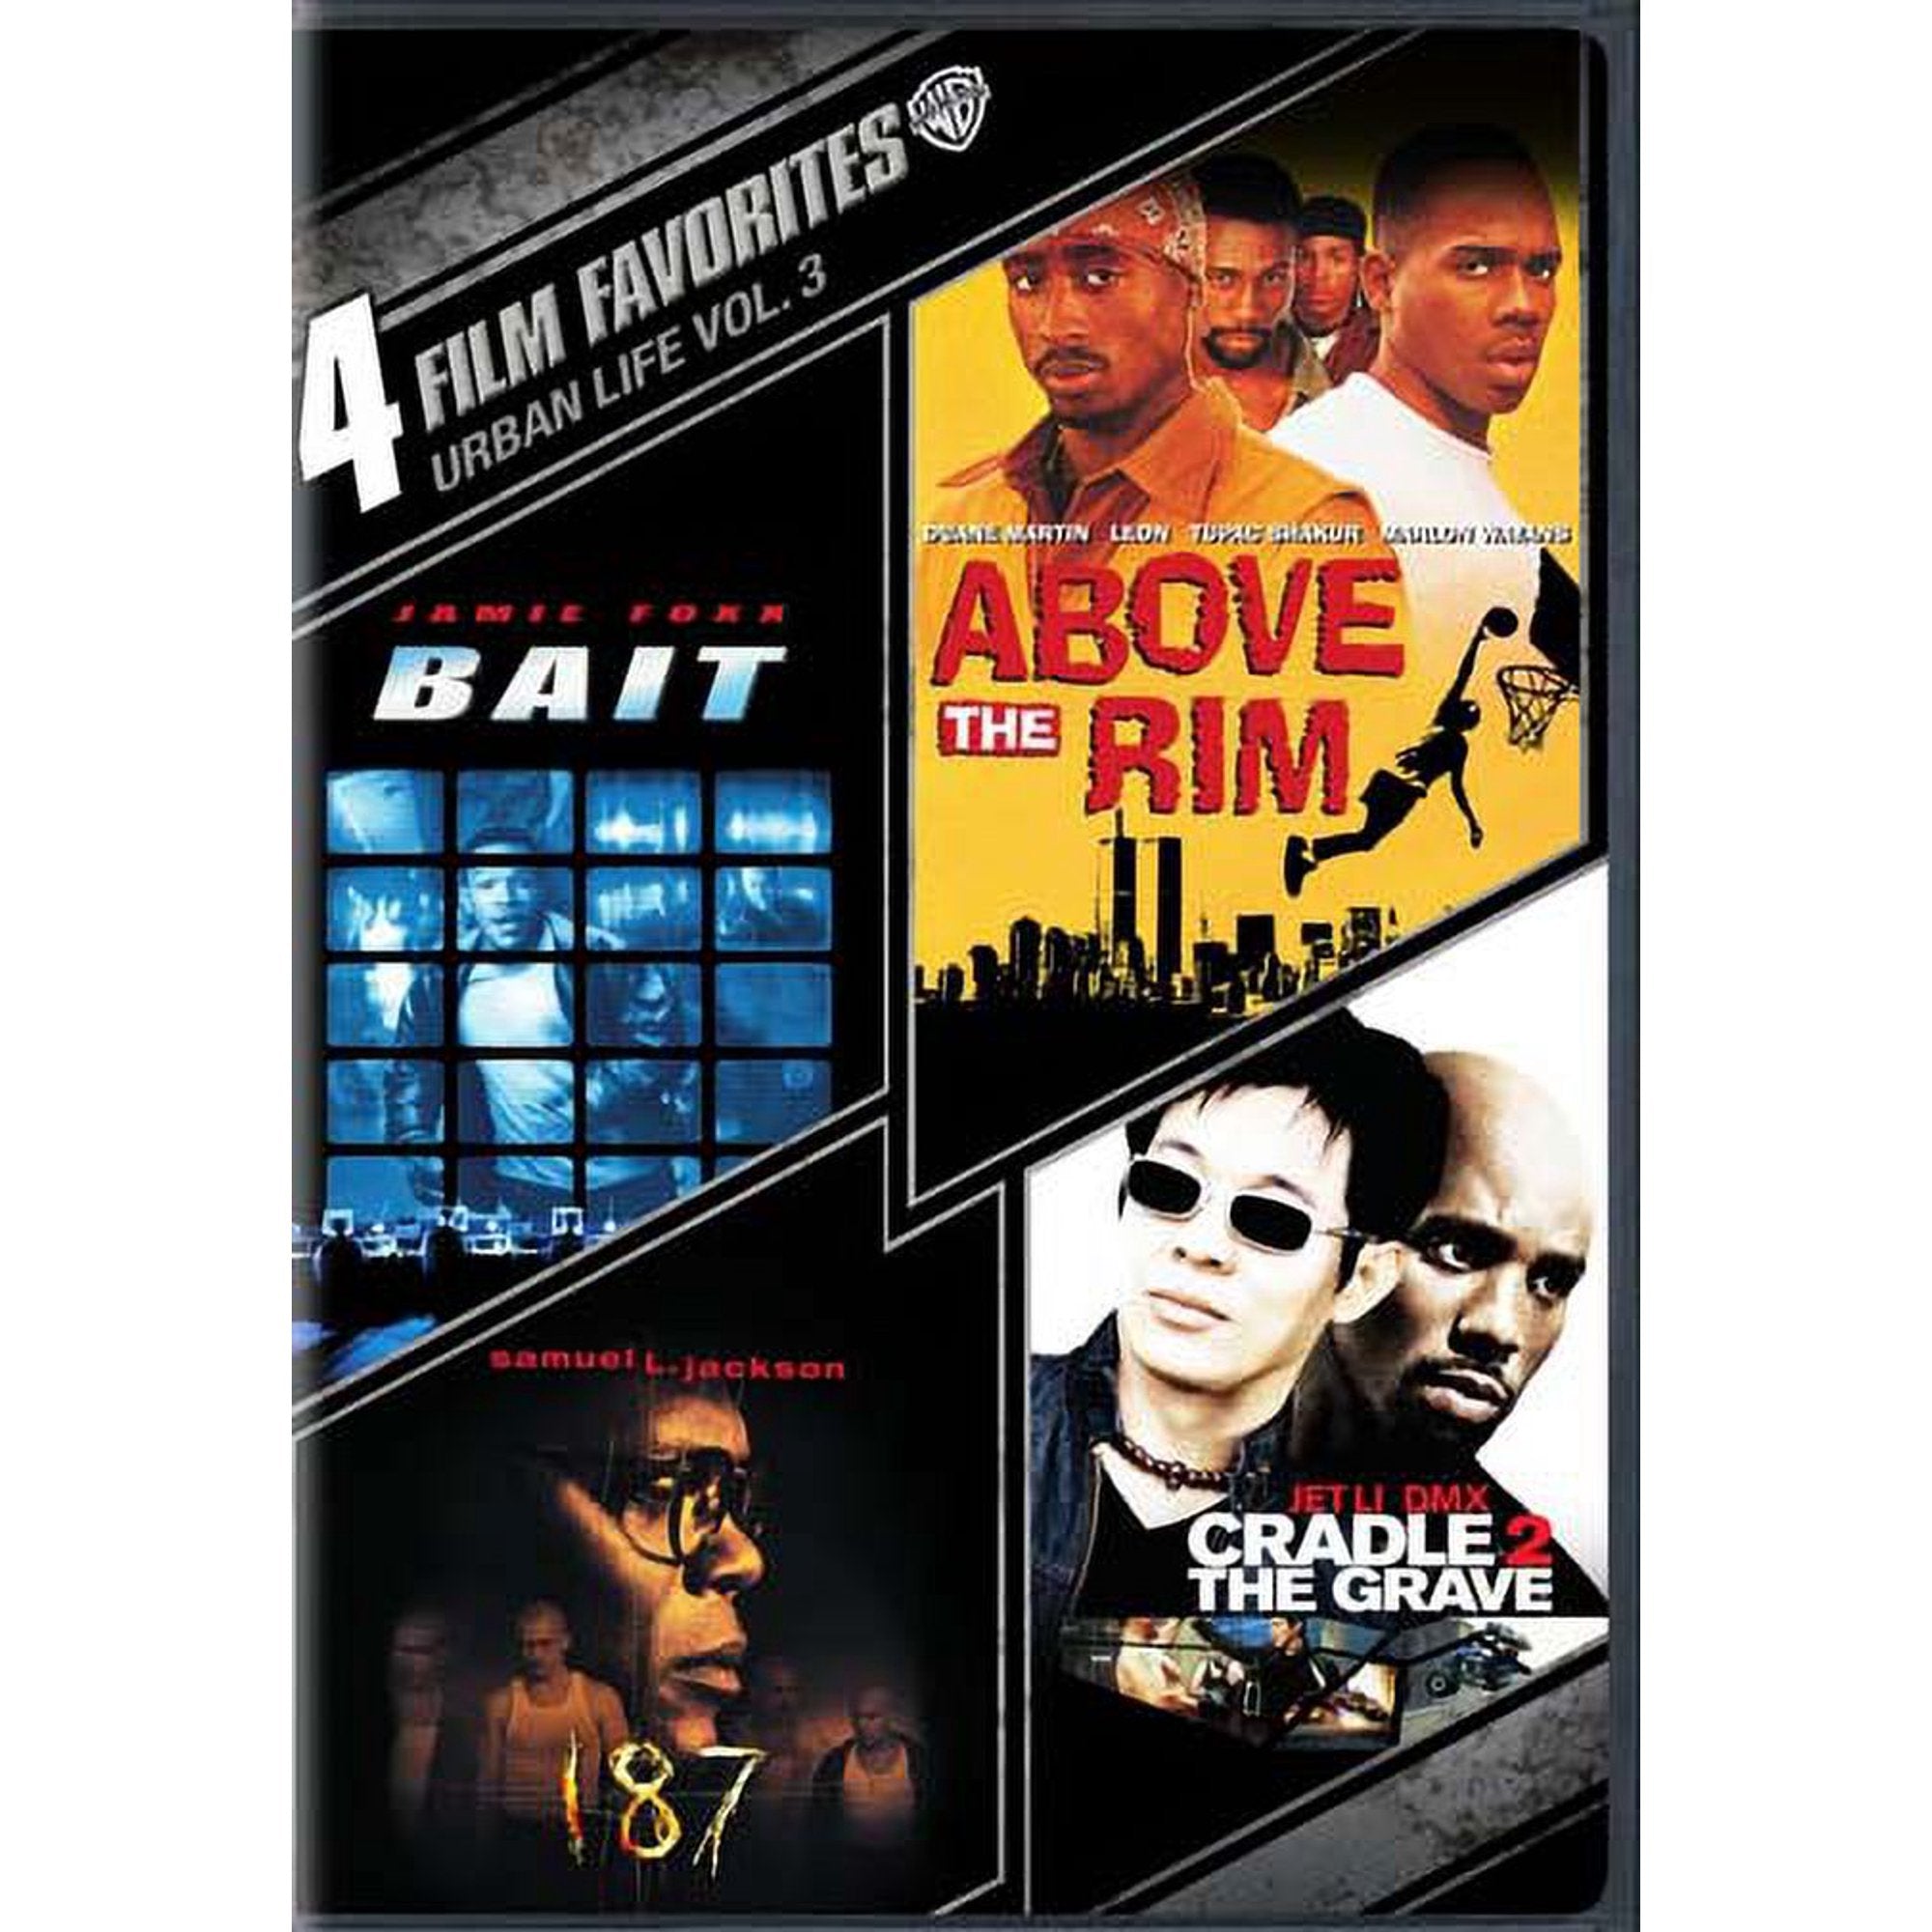 4 Film Favorites: Urban Life Volume 3 [DVD] -  Above the Rim / Bait / 187 / Cradle 2 the Grave [DVD]